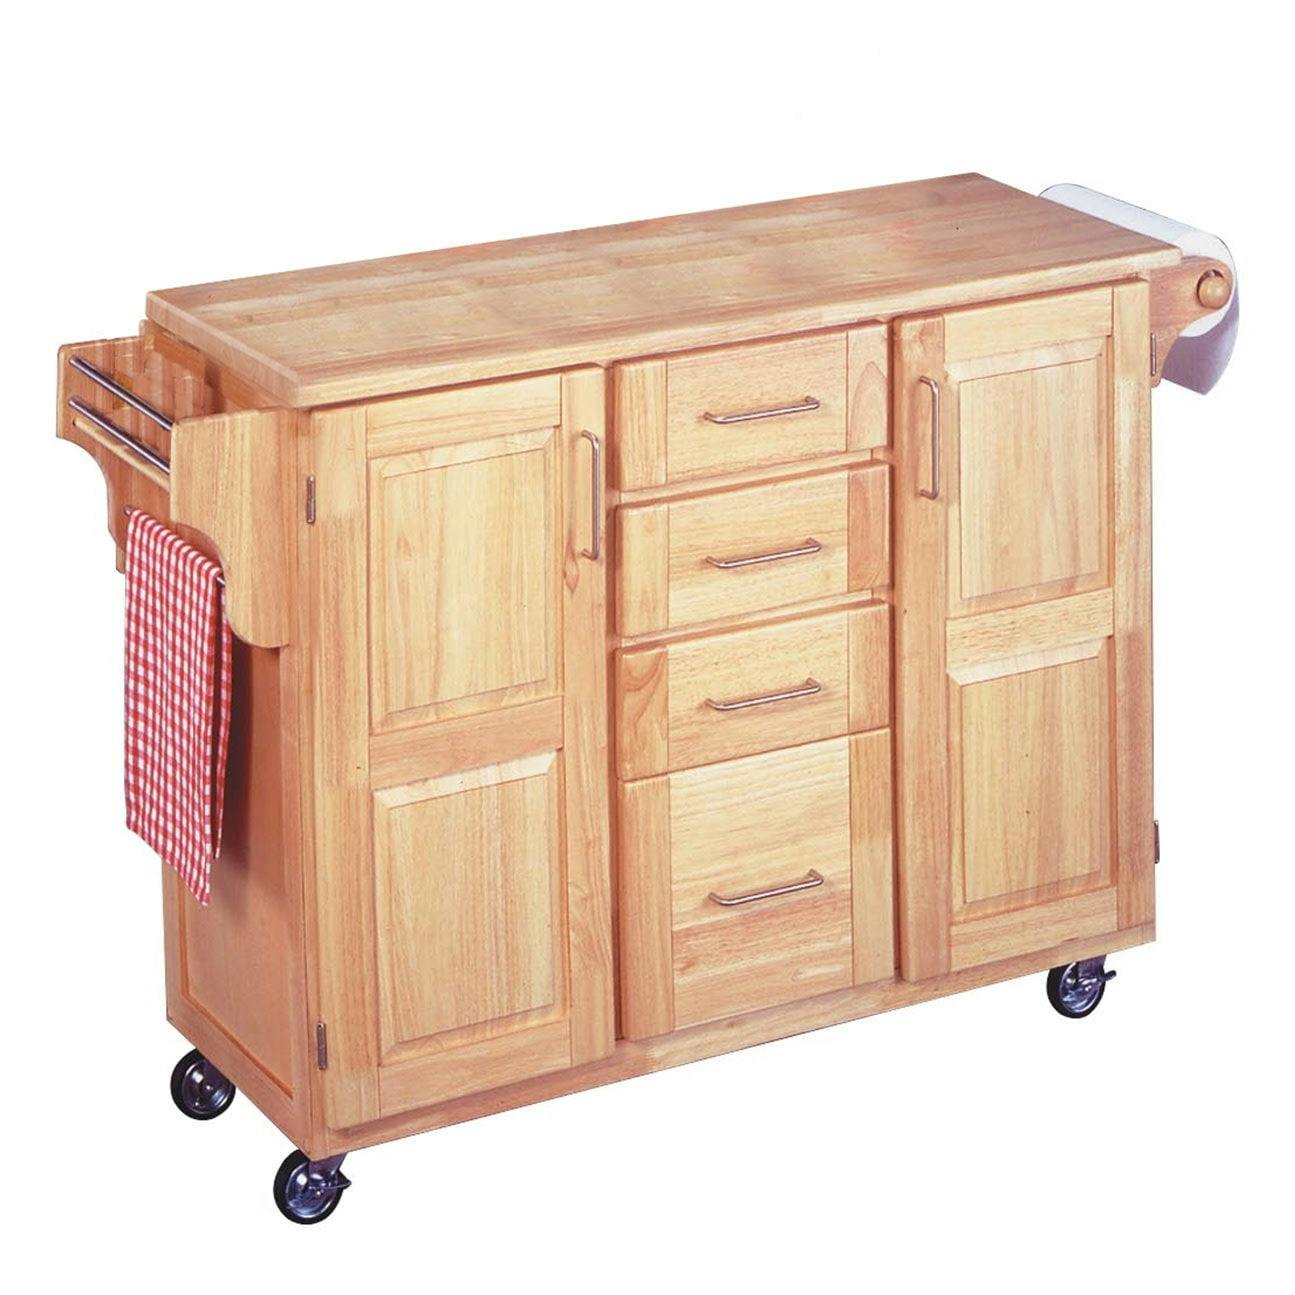 Natural Oak Drop-Leaf Rectangular Kitchen Cart with Spice Rack and Storage